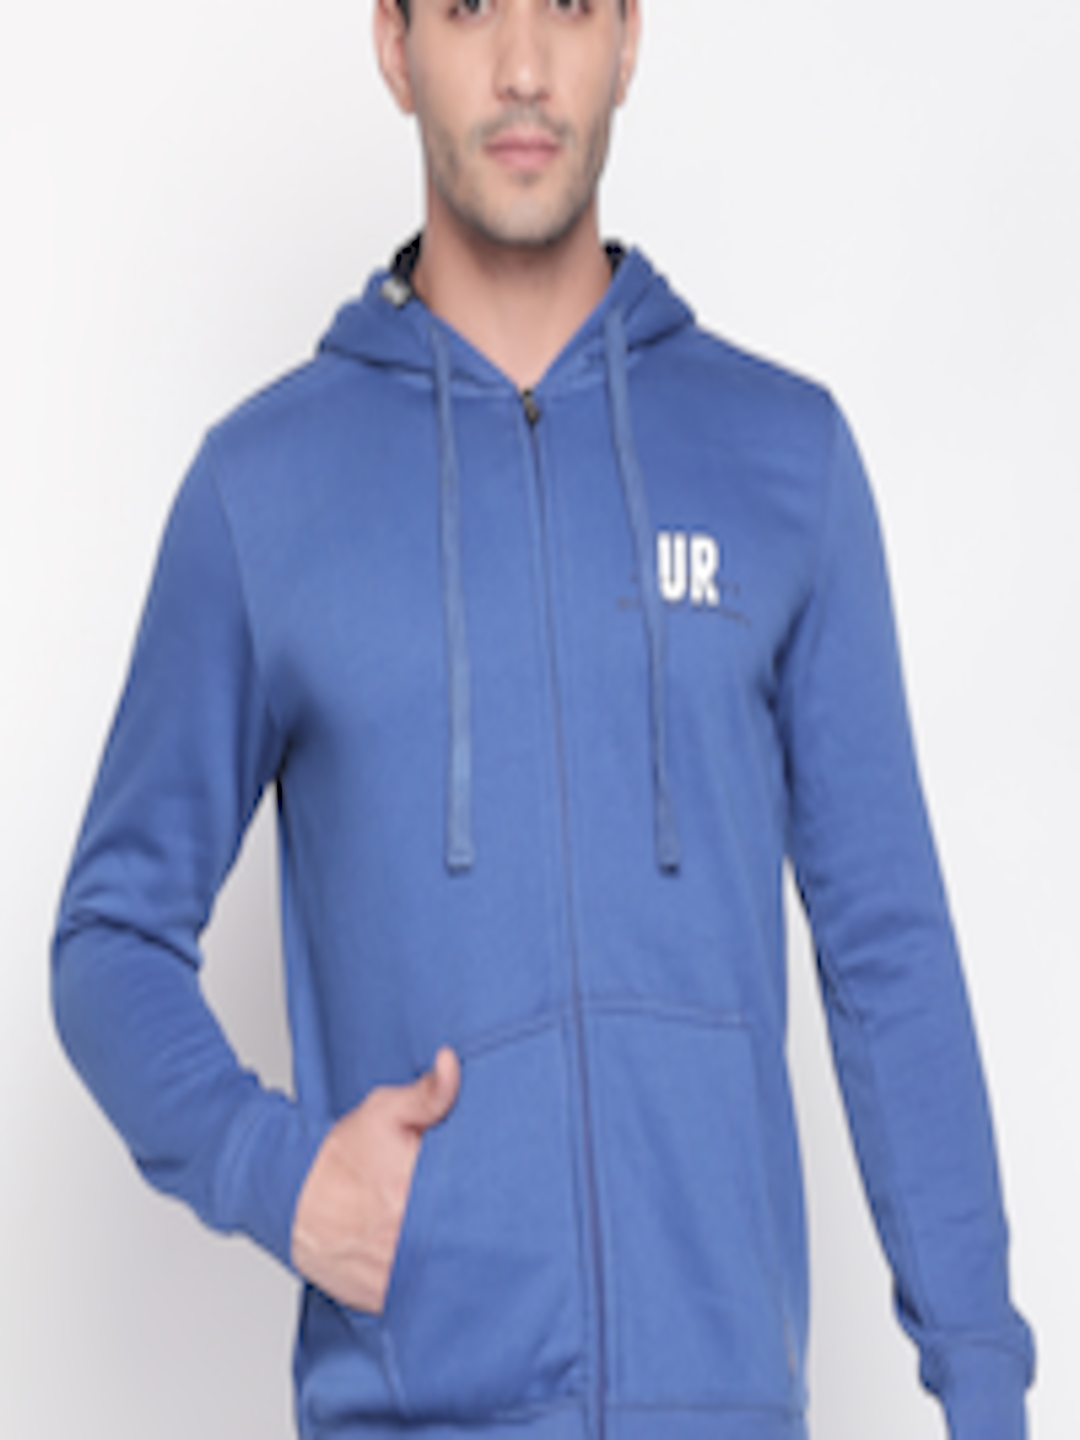 Buy Urban Ranger By Pantaloons Men Blue Solid Cardigan Sweater ...